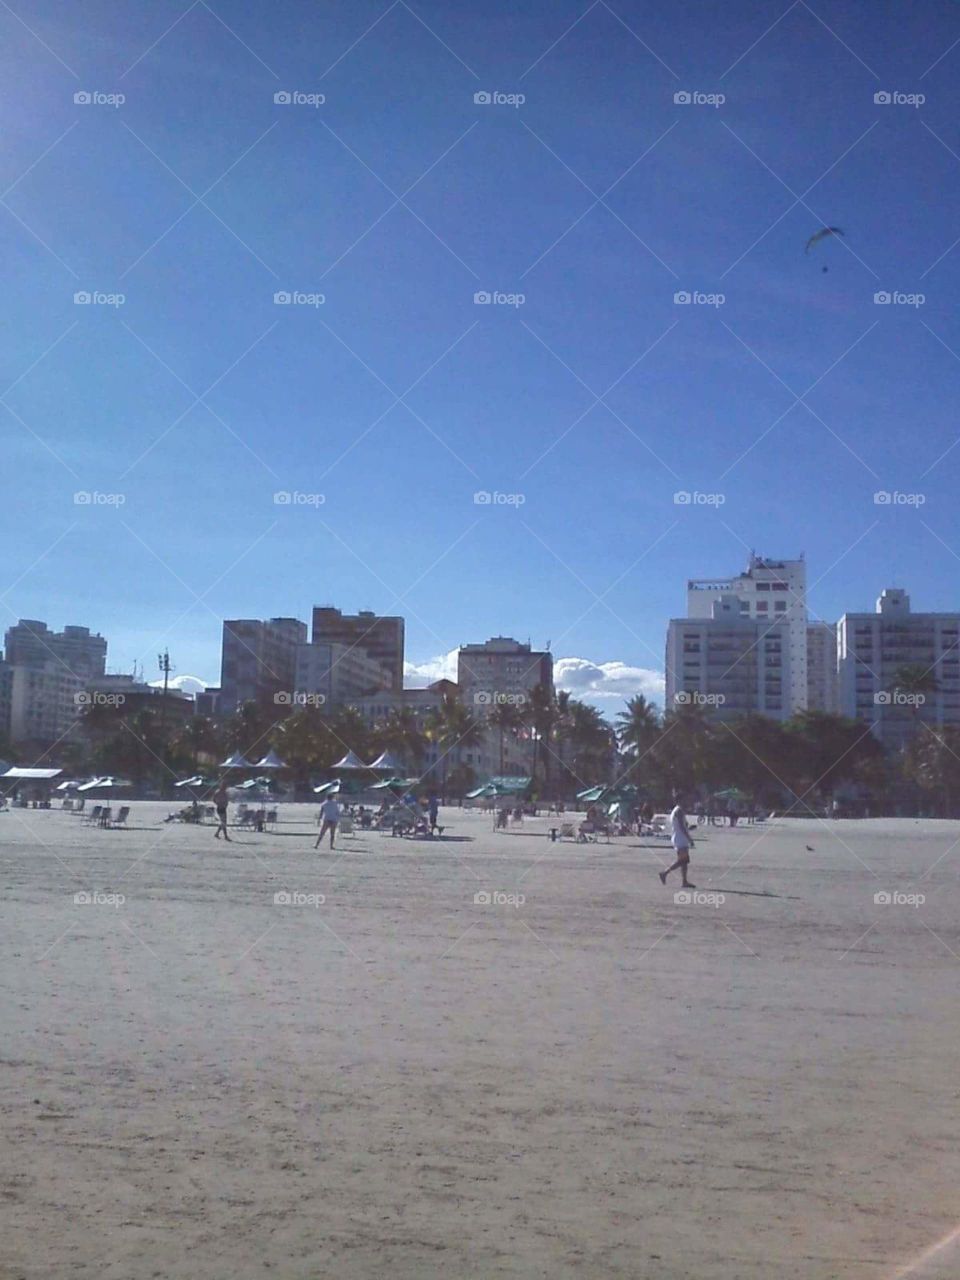 The best place of Sao Paulo - Santos beach / praia de Santos